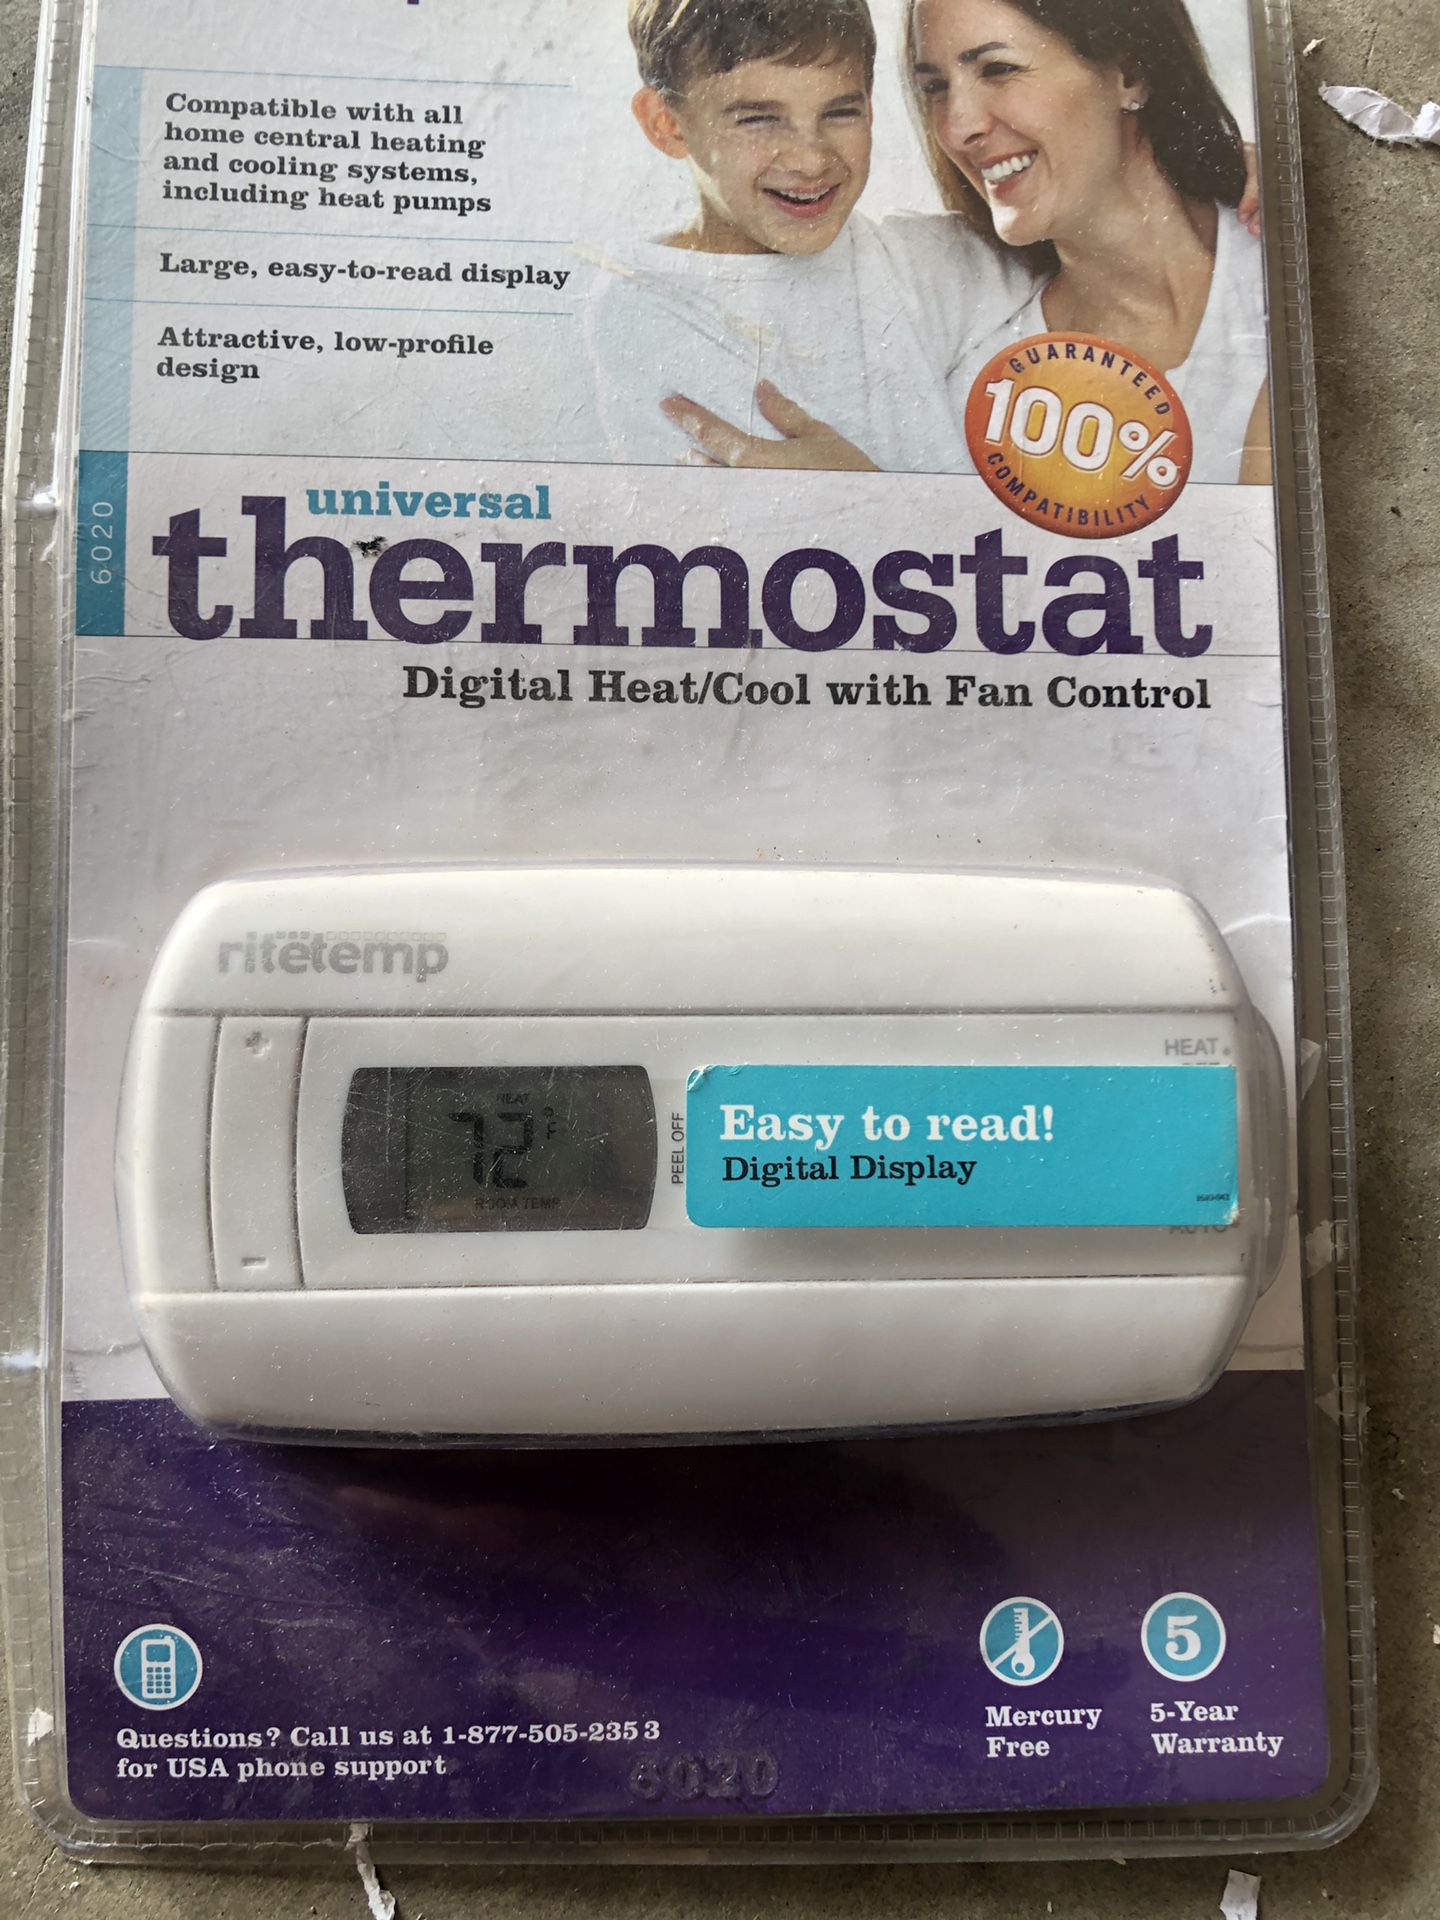 Ritetemp thermostat 6020